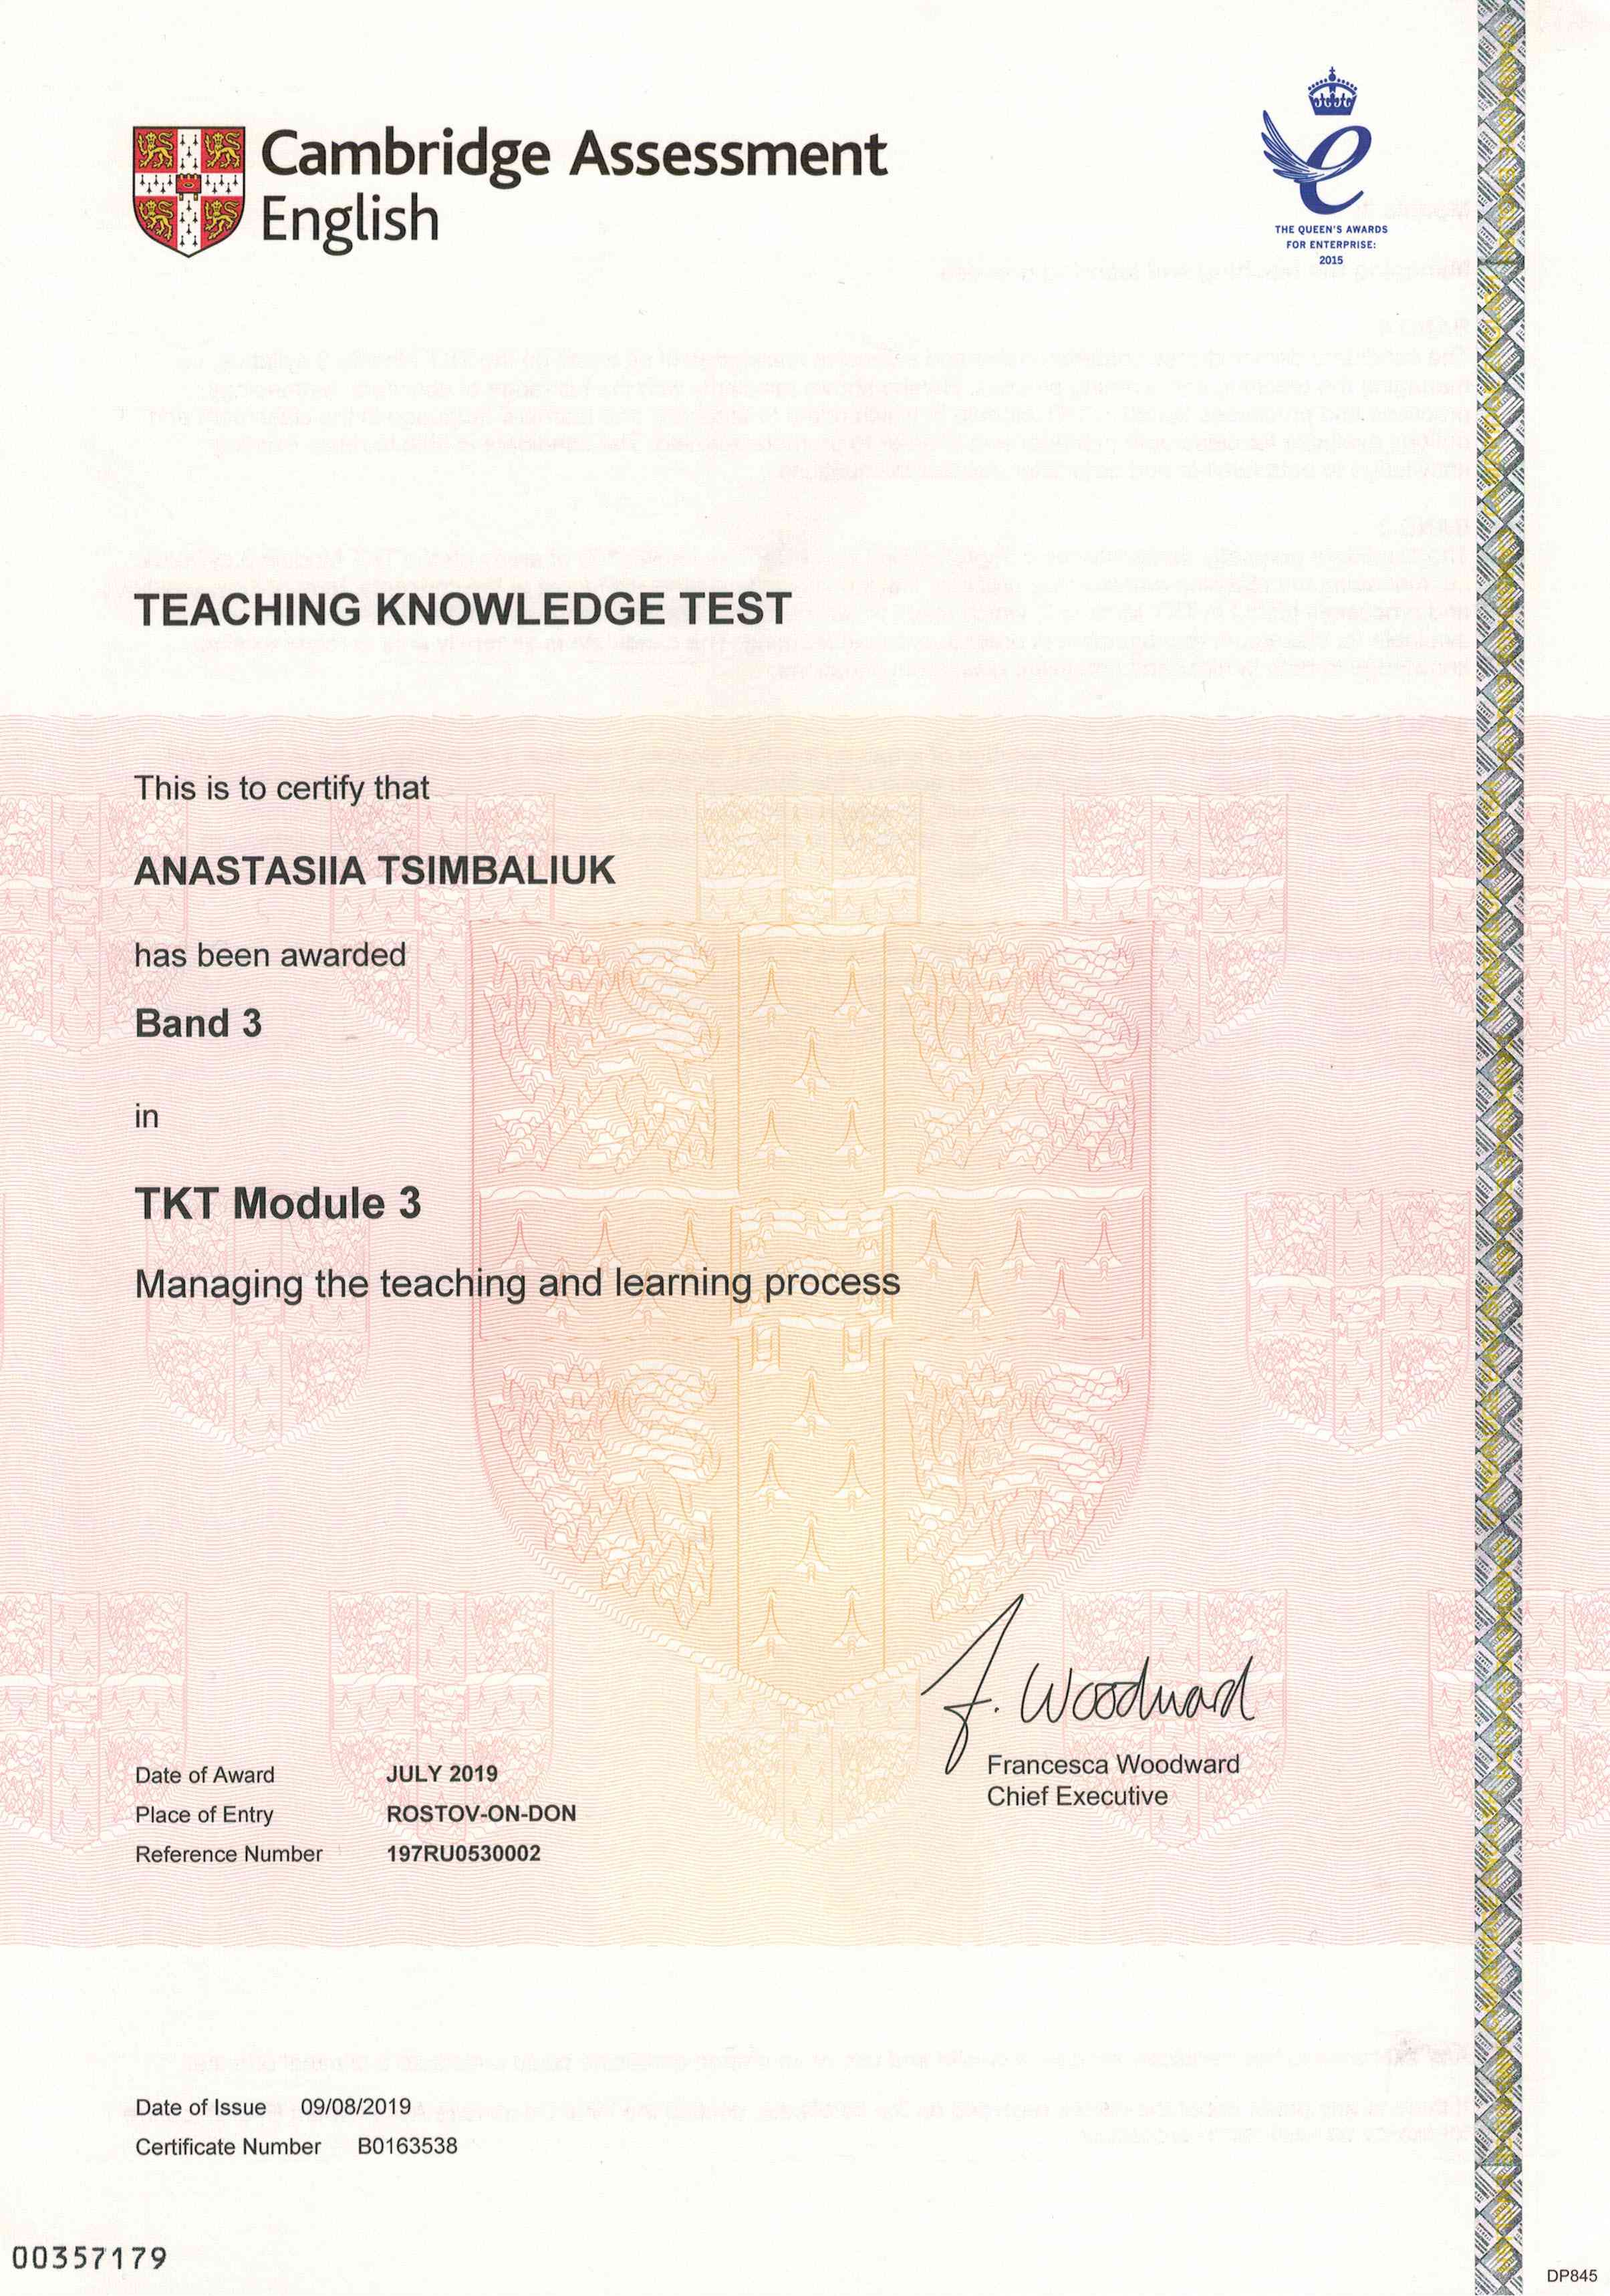 The Teaching Knowledge Test (module 3)